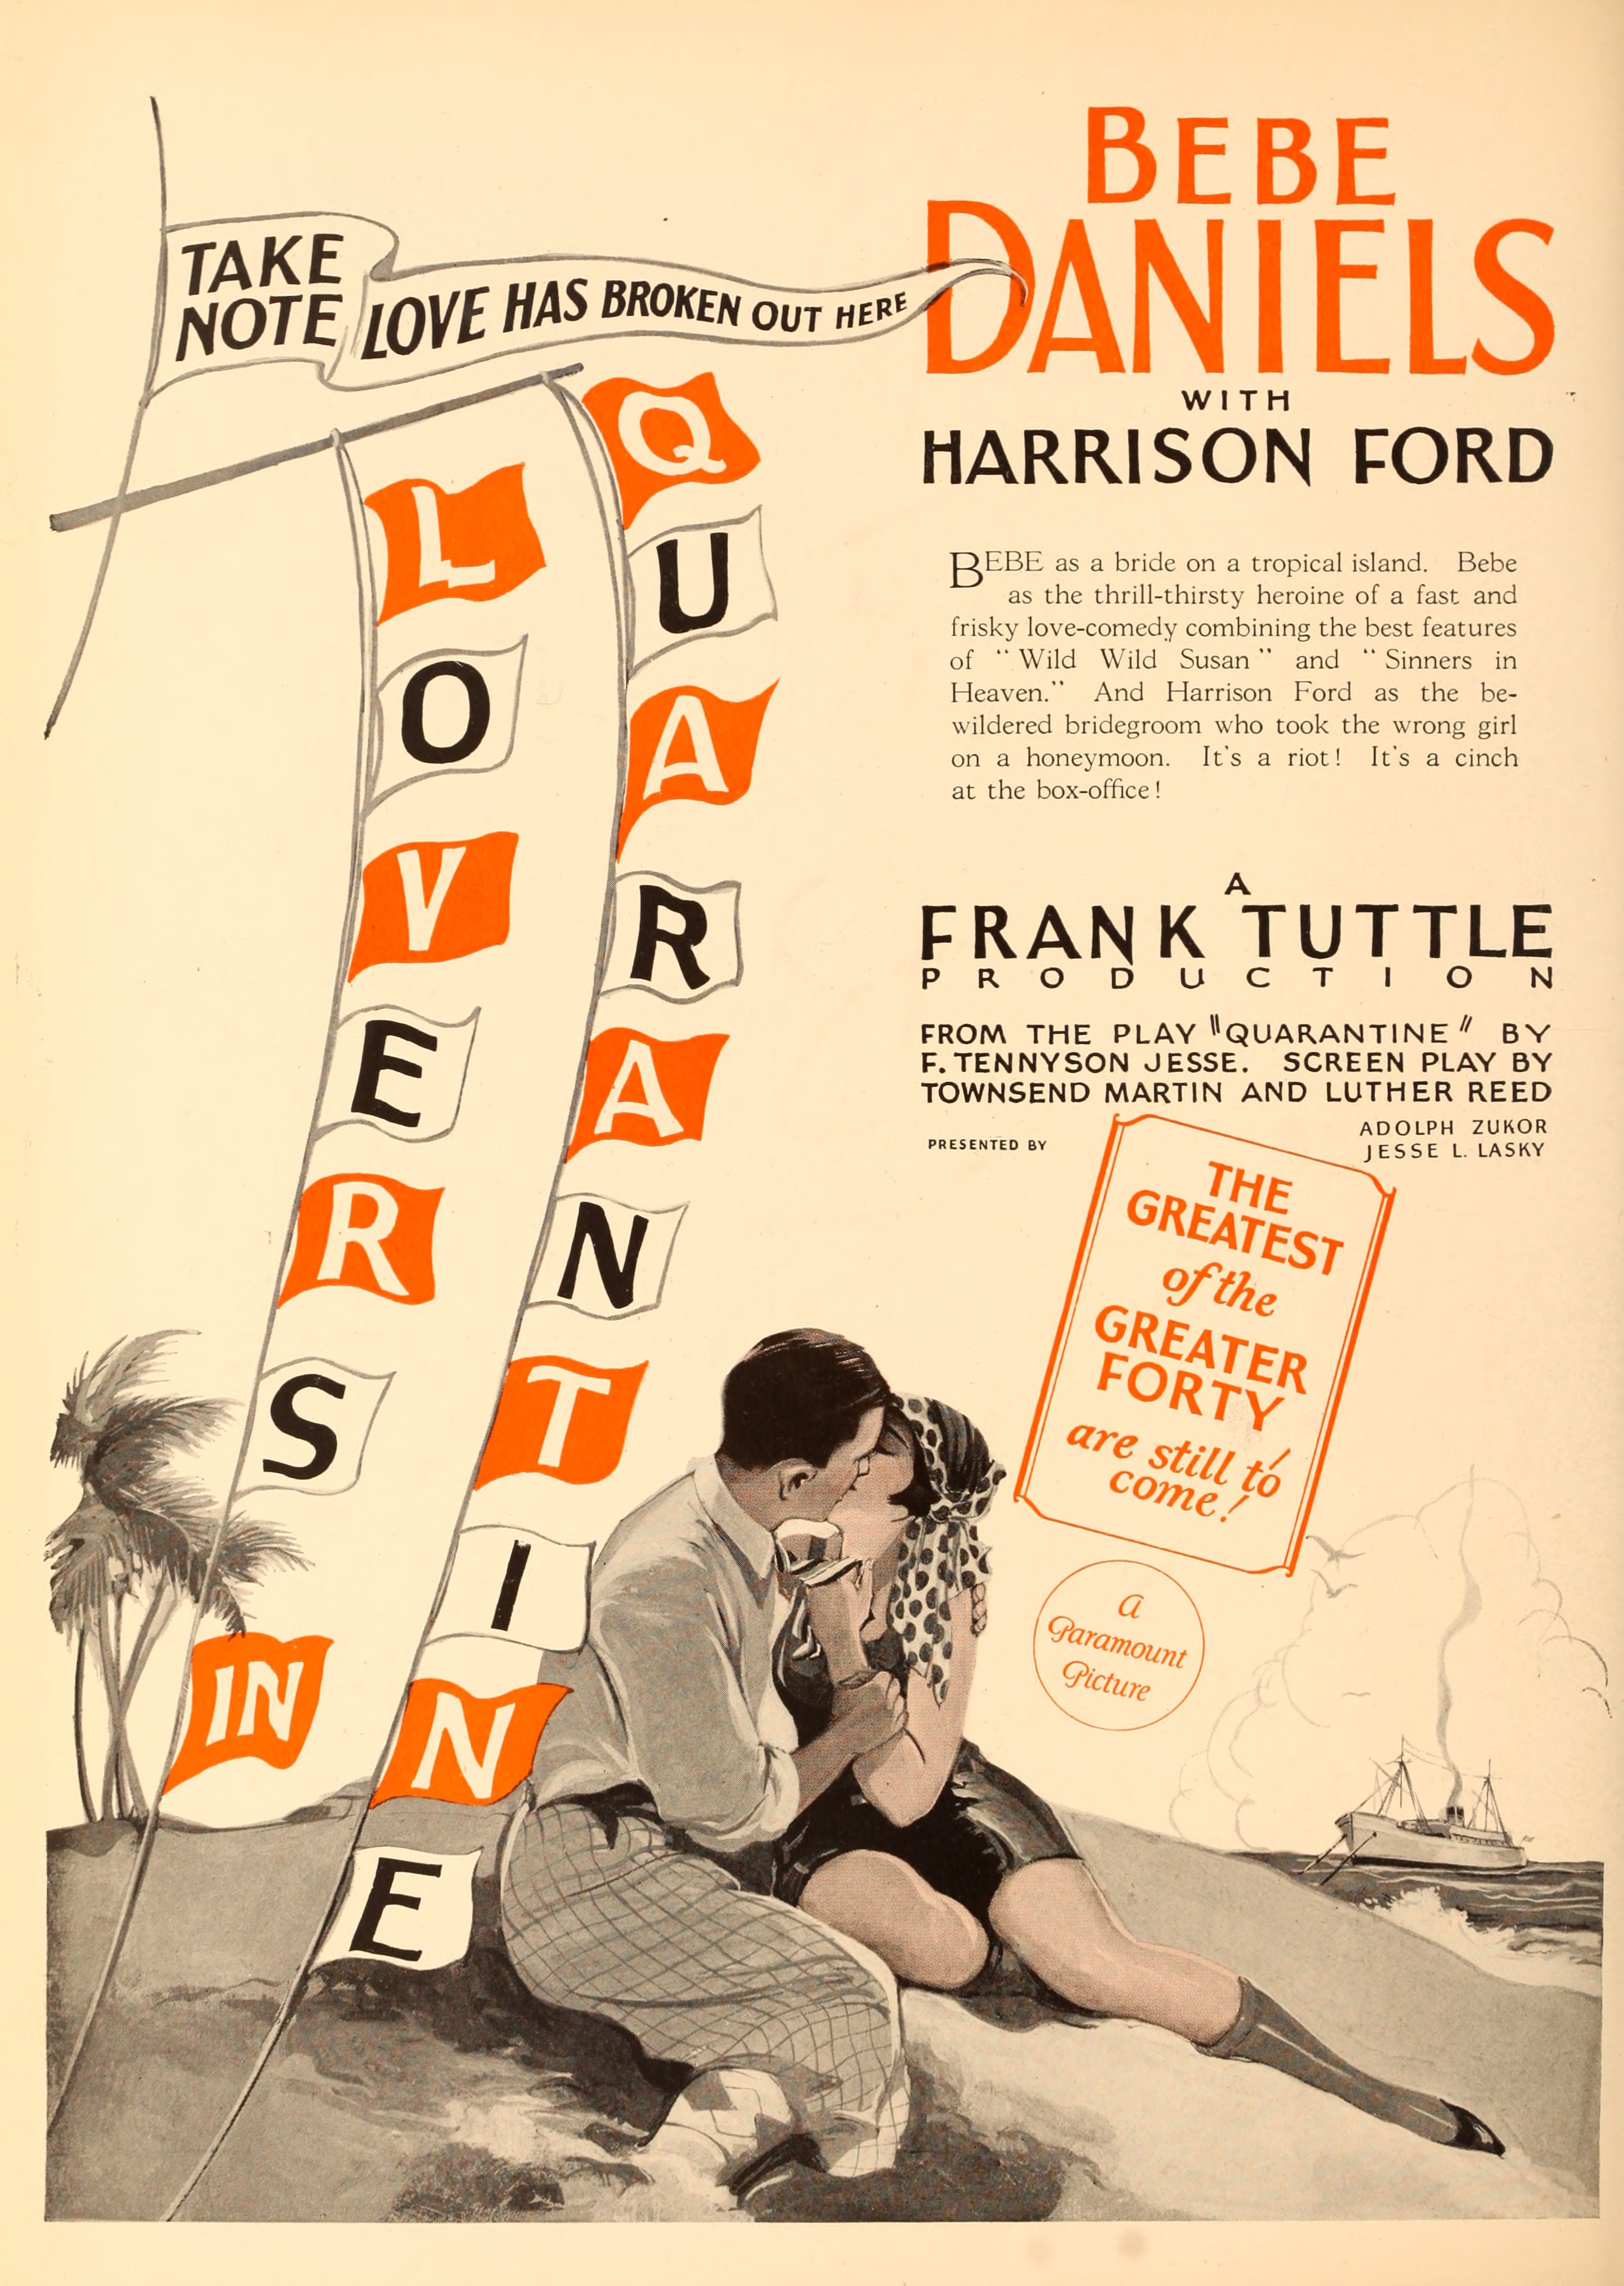 Lovers in Quarantine (1925) | www.vintoz.com